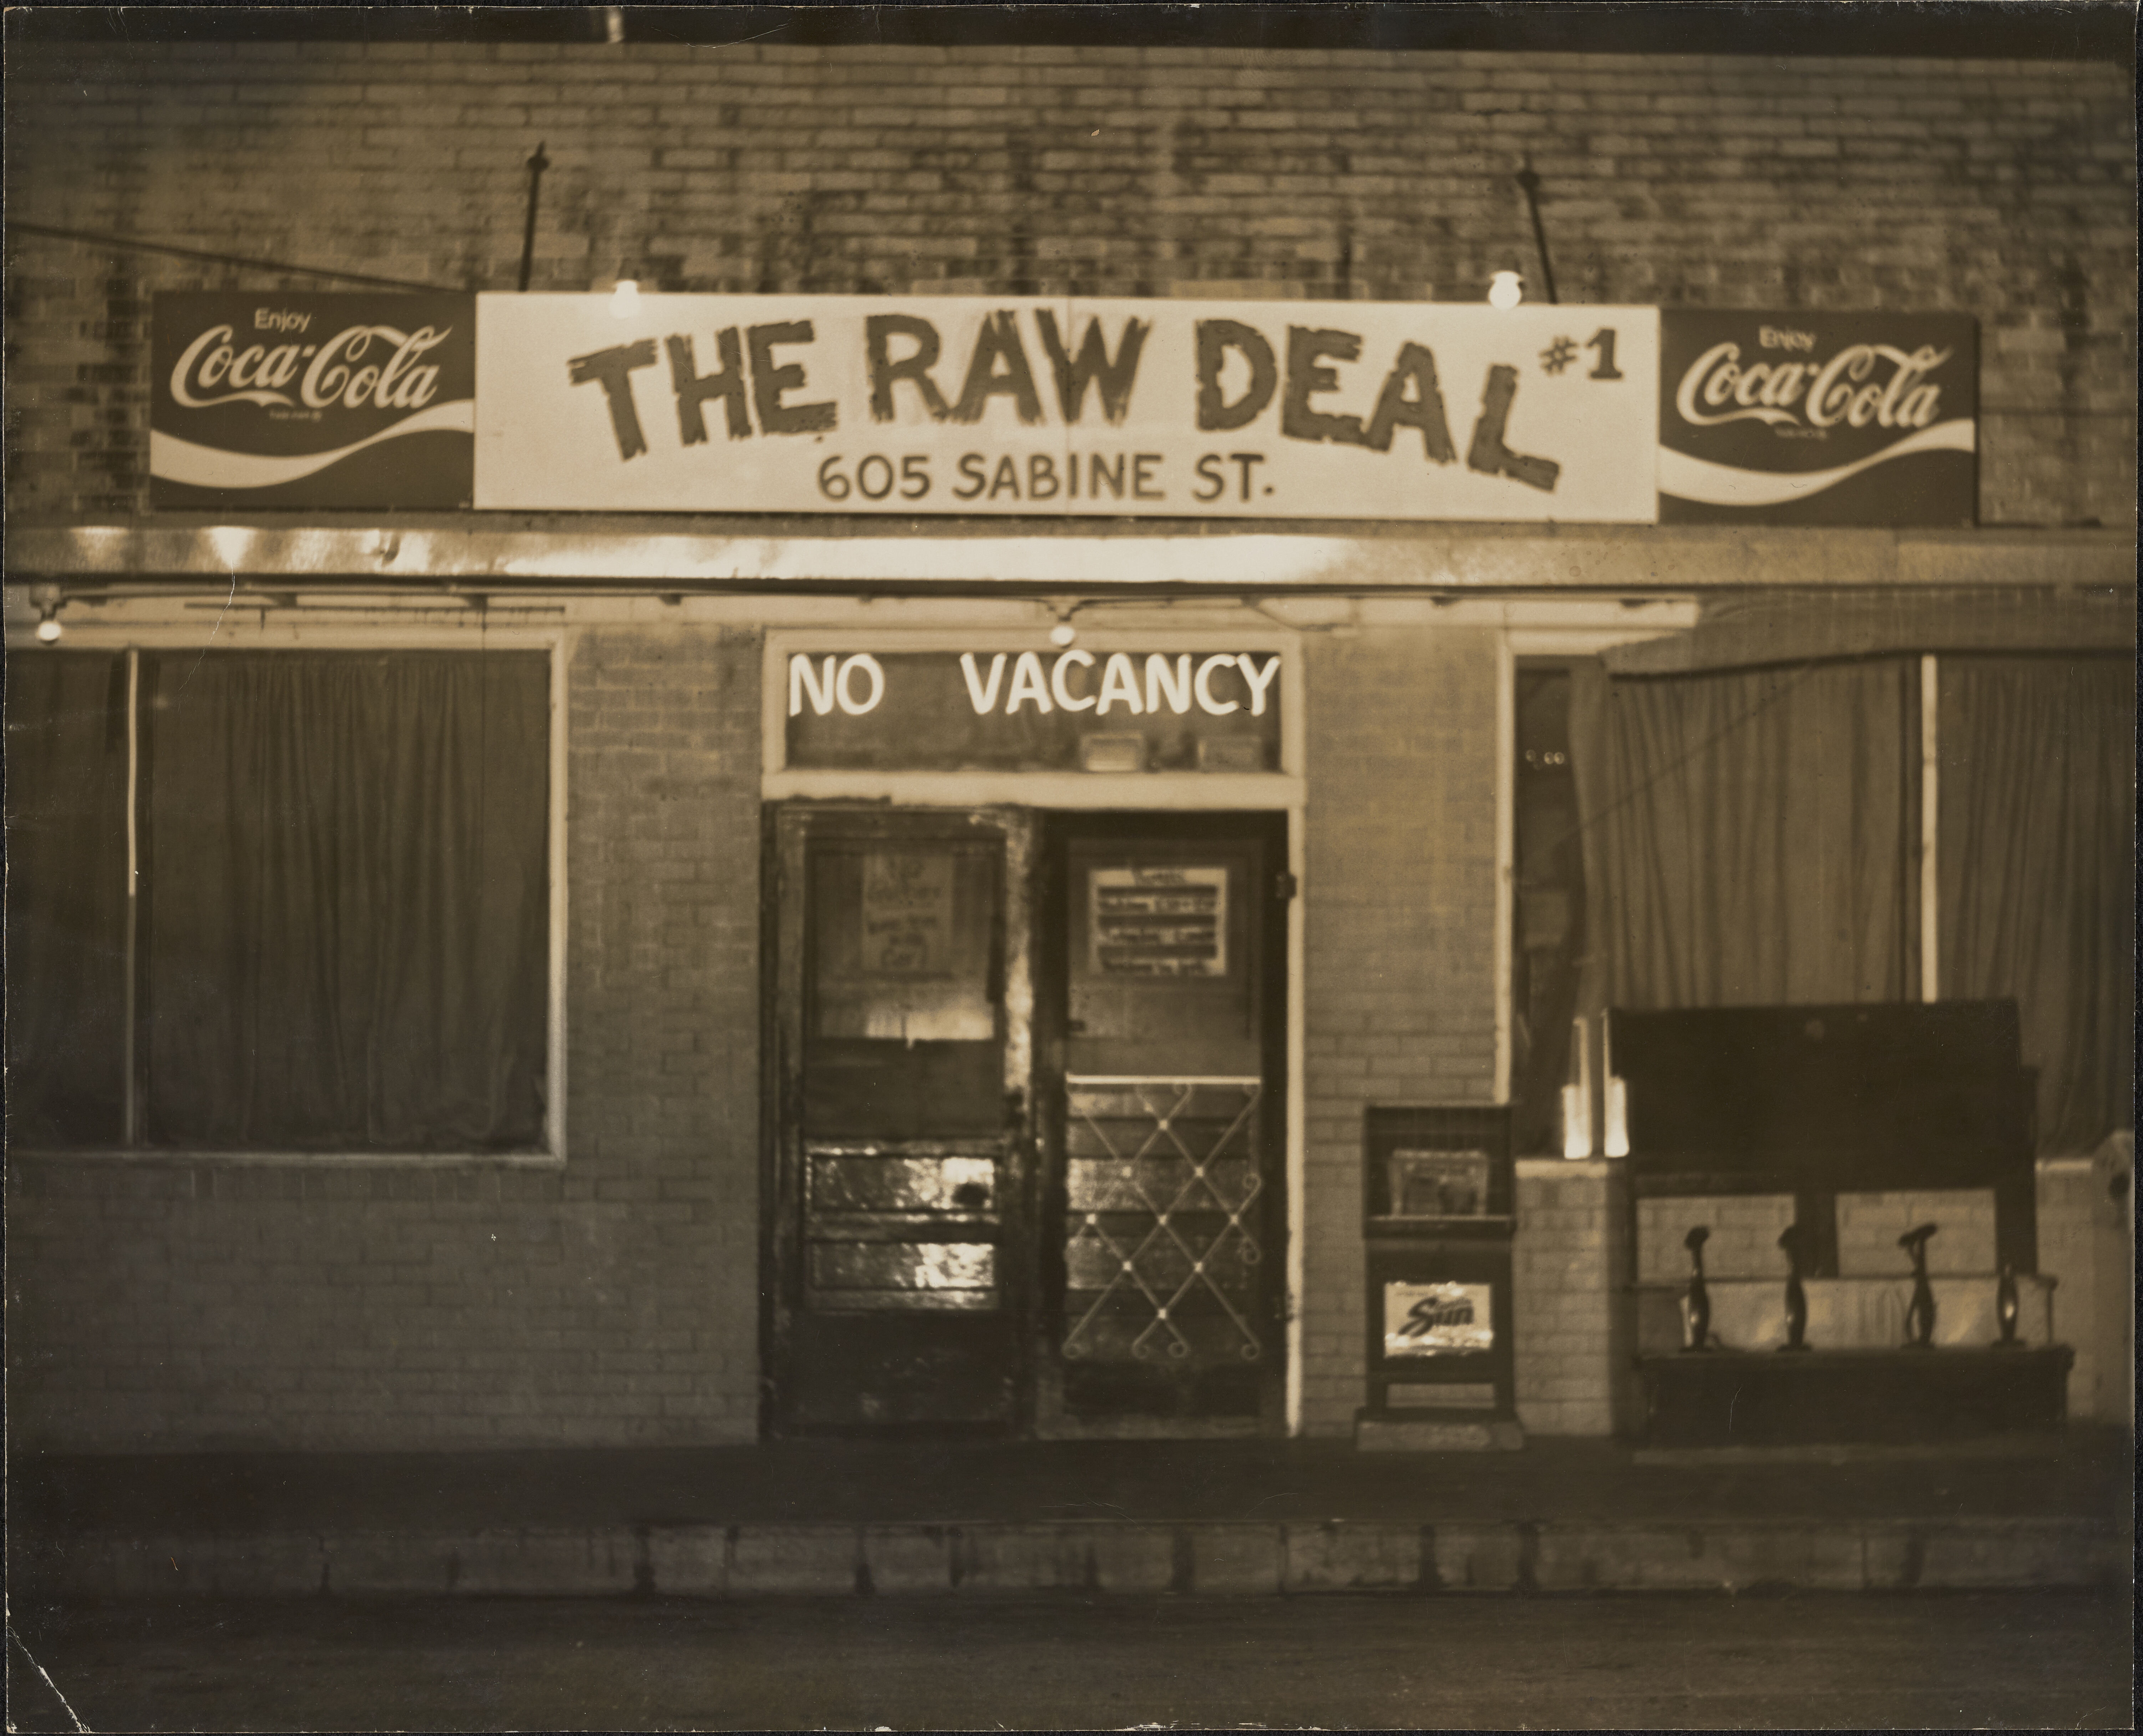 The Raw Deal Collection Description